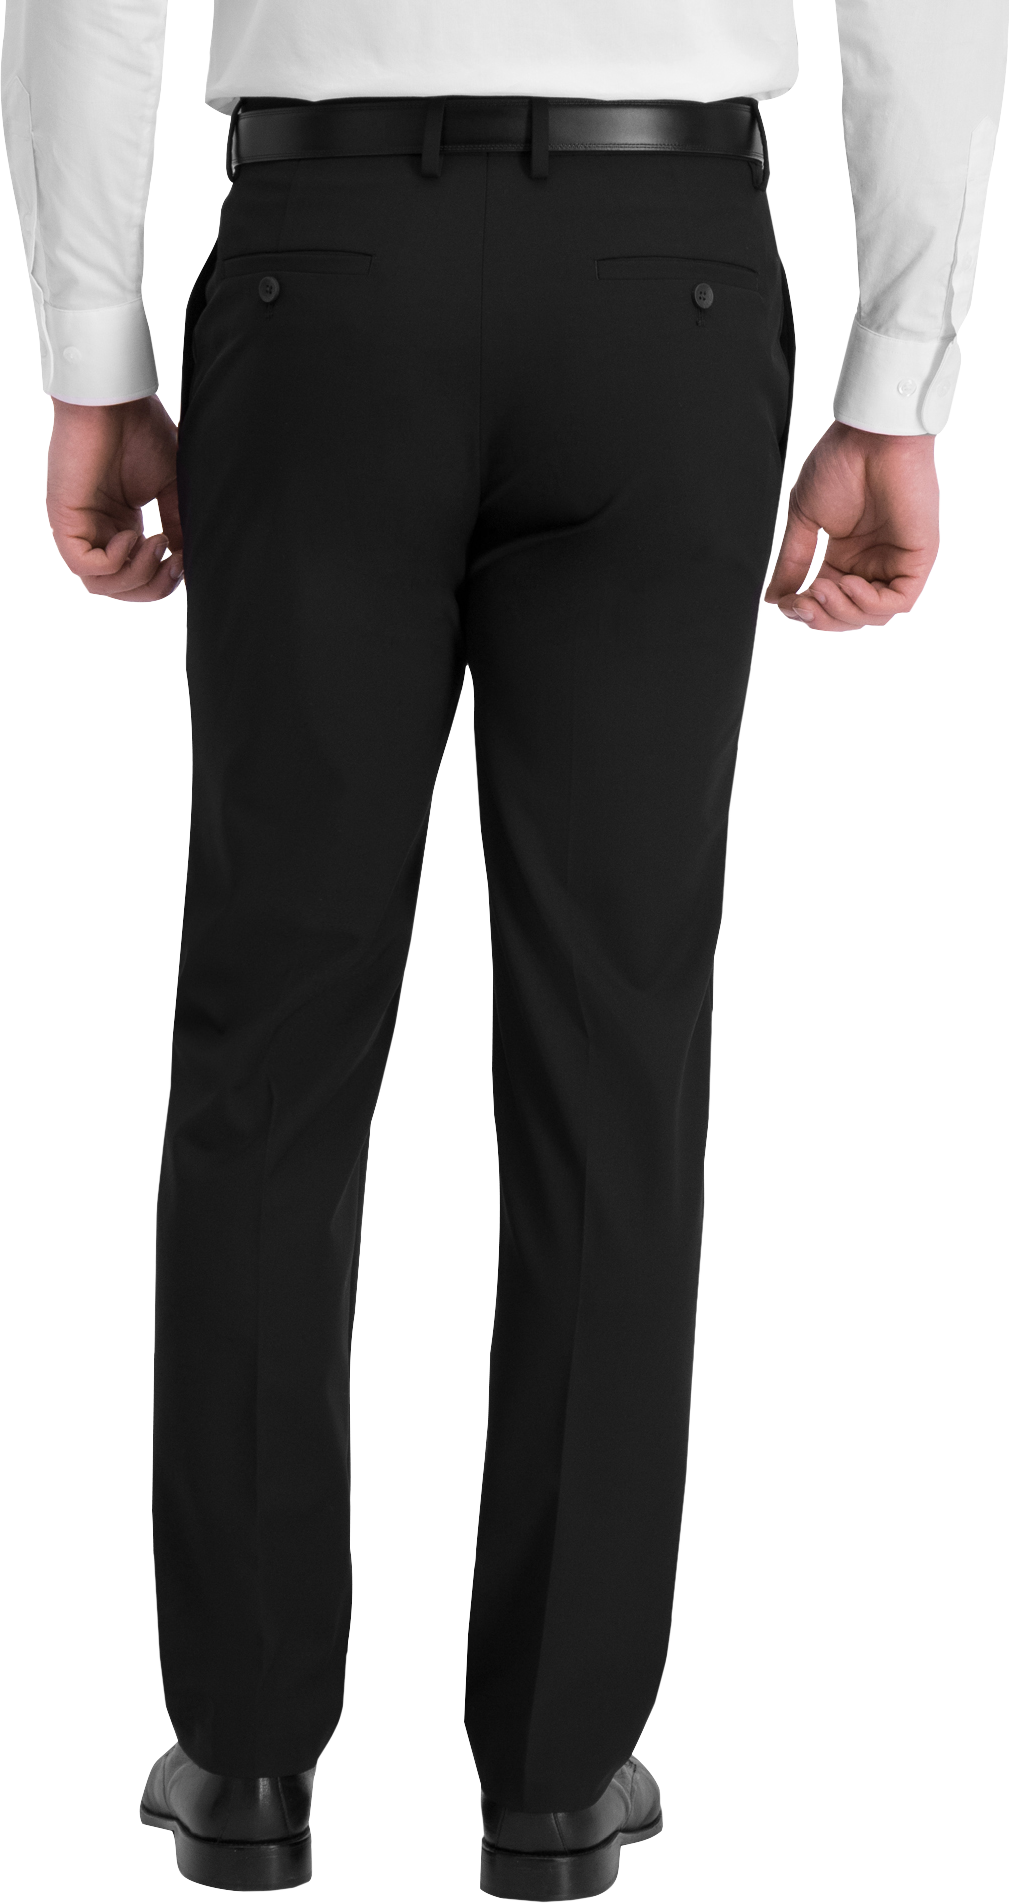 J.M. Haggar™ Slim Fit Performance 4-Way Stretch Suit Separates Pants